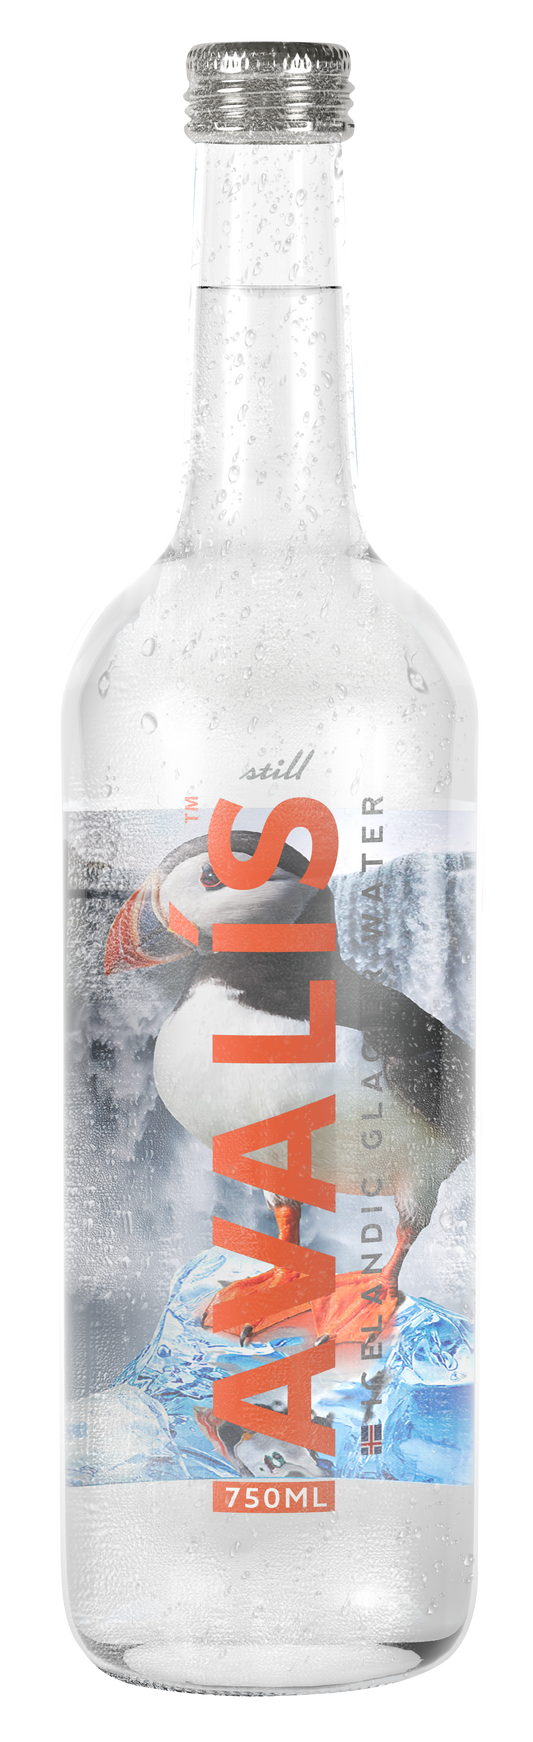 Avalis Icelandic Glacier Water - A case of 12 Still x 750ml Glass Bottles